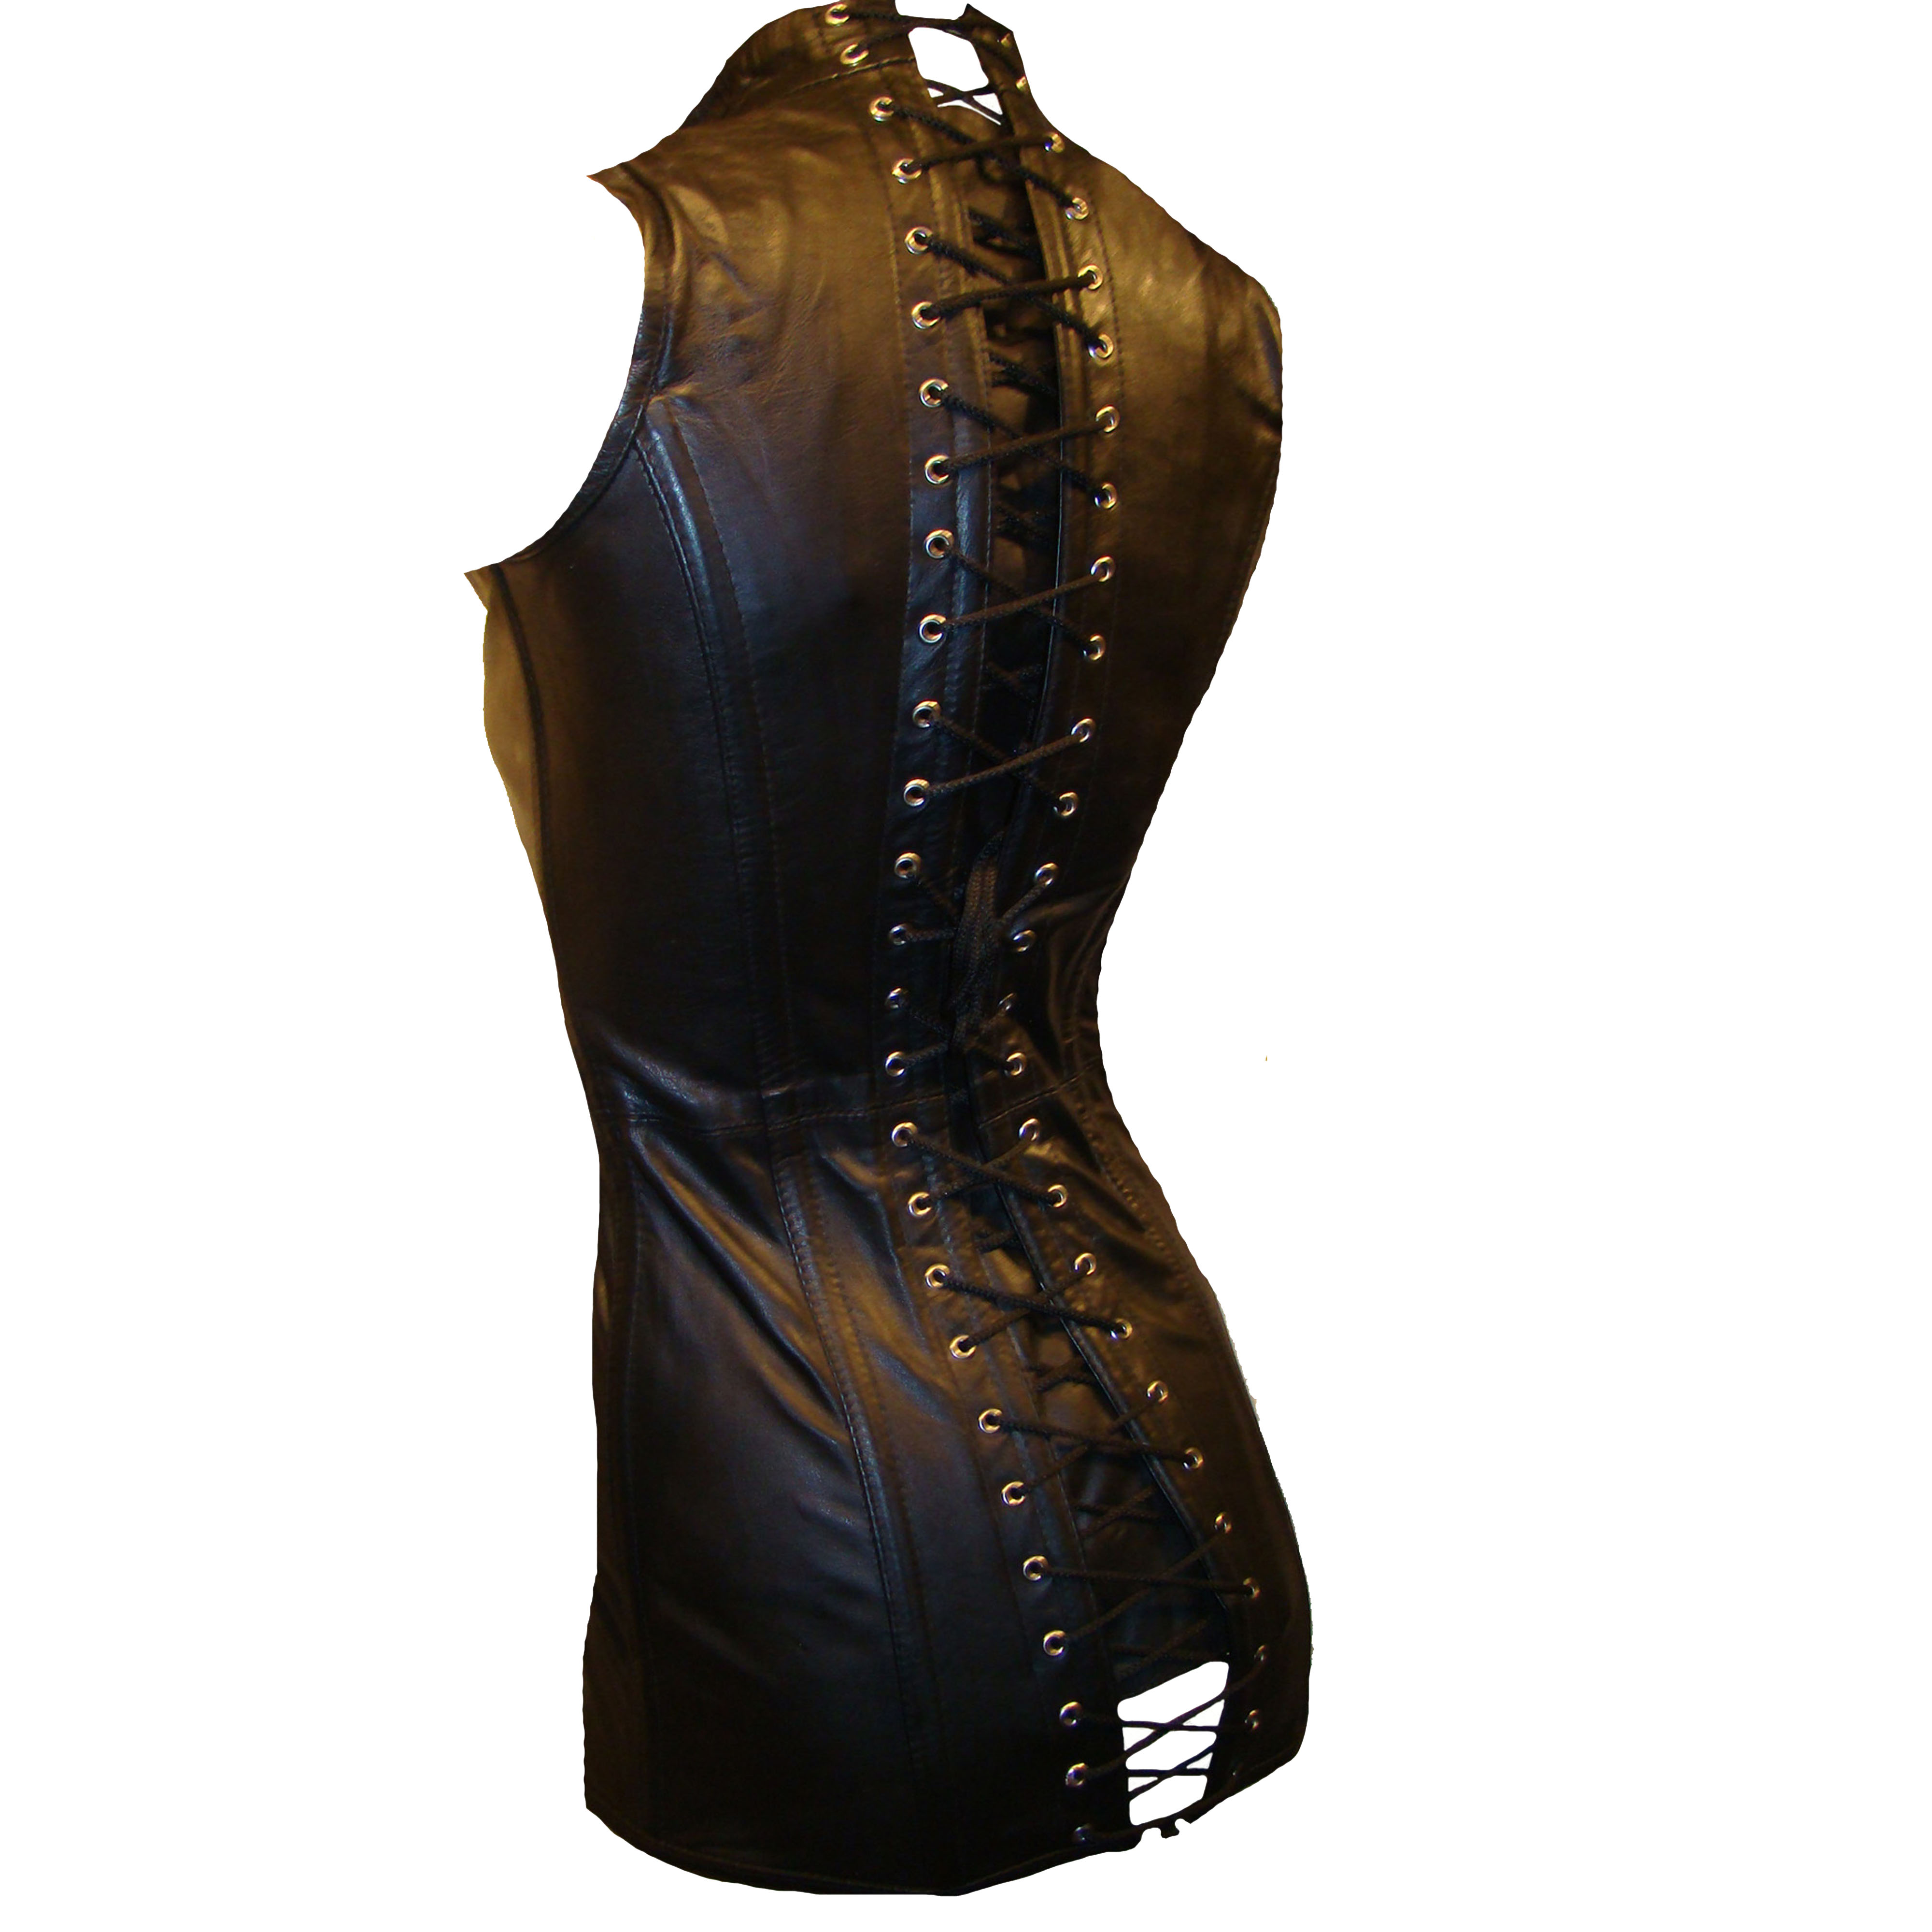 black leather bustier dress